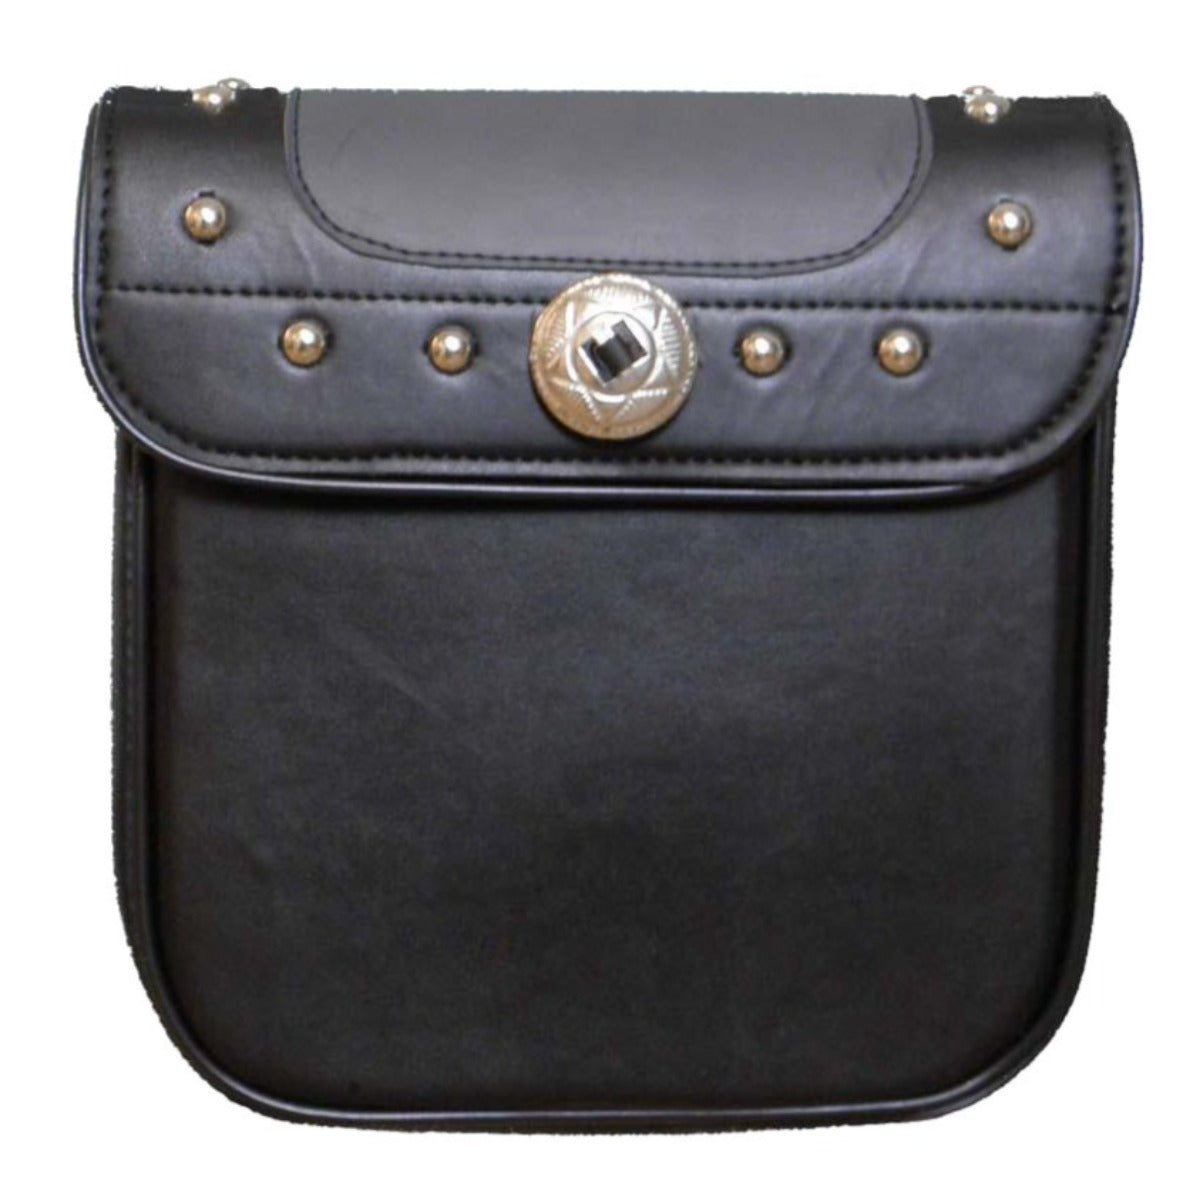 Vance Leather Black and Gray Studded Sissy Bar Bag